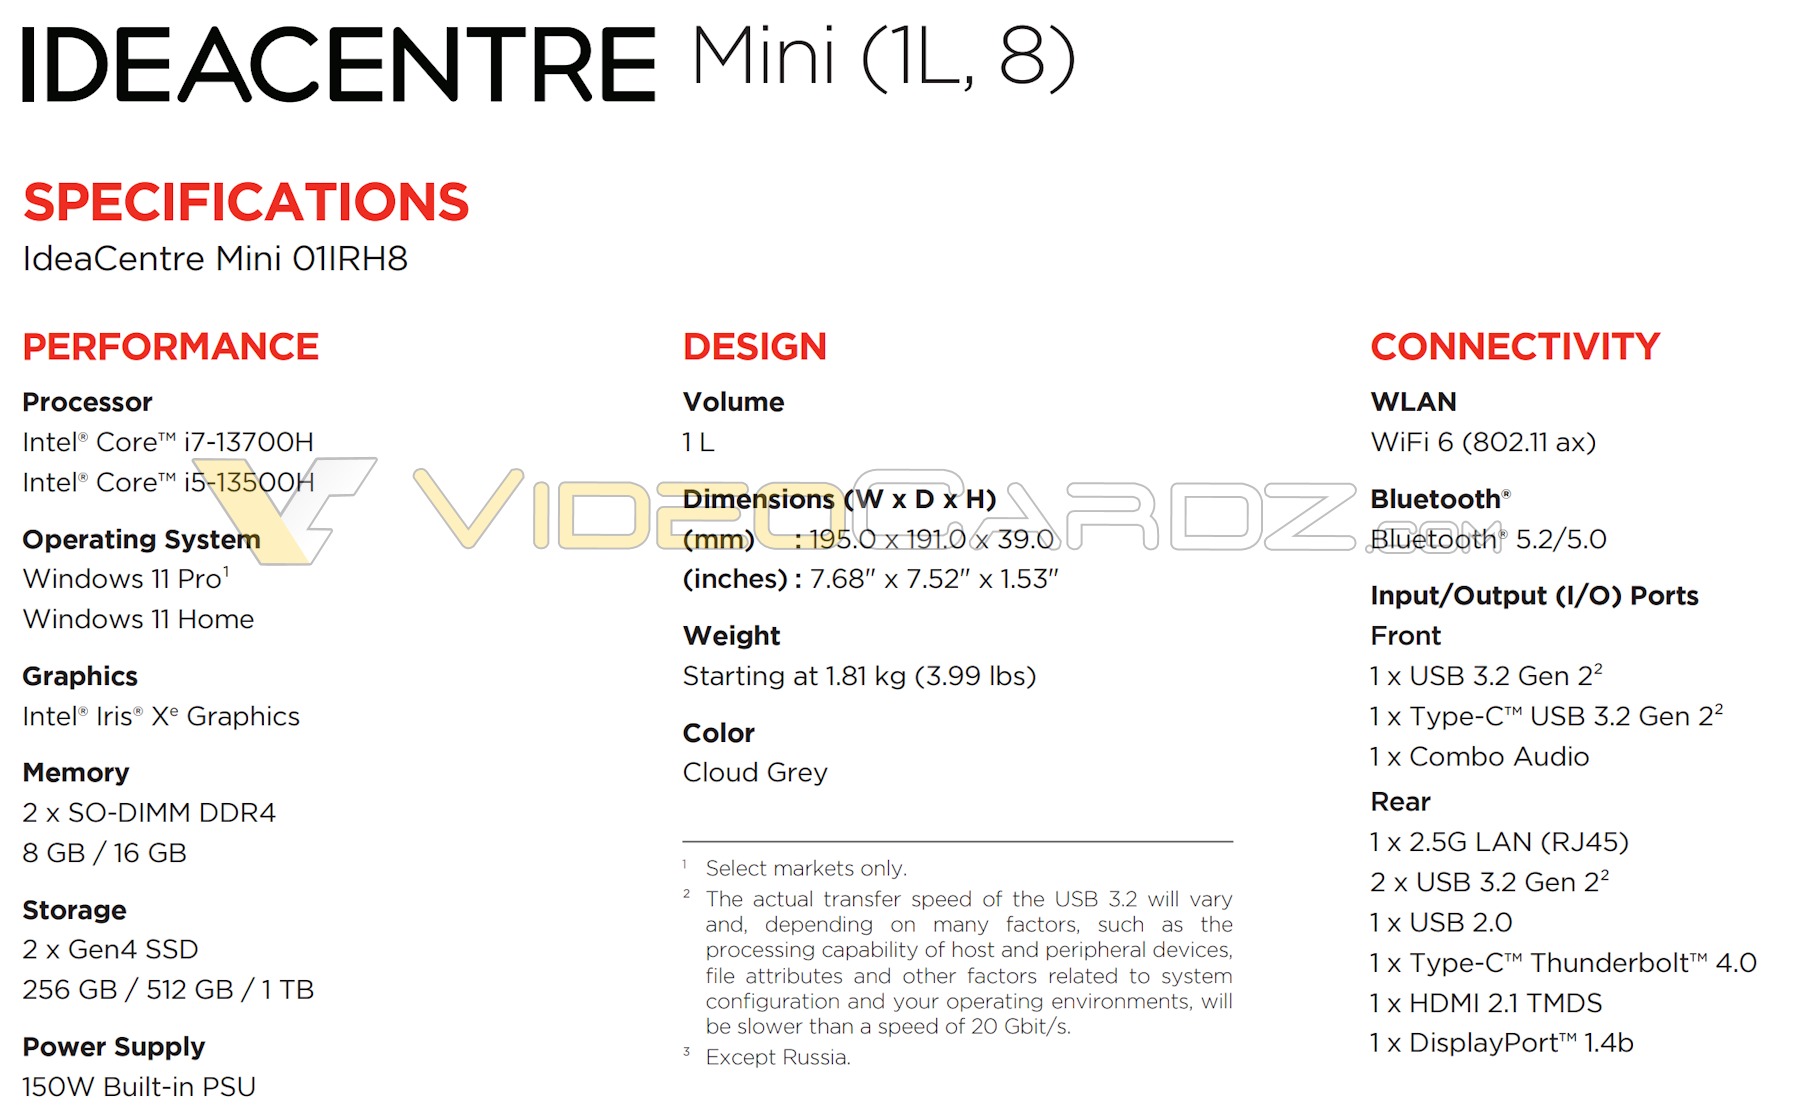 Lenovo IdeaCentre Mini PC features up to Intel Core i7-13700H CPU 